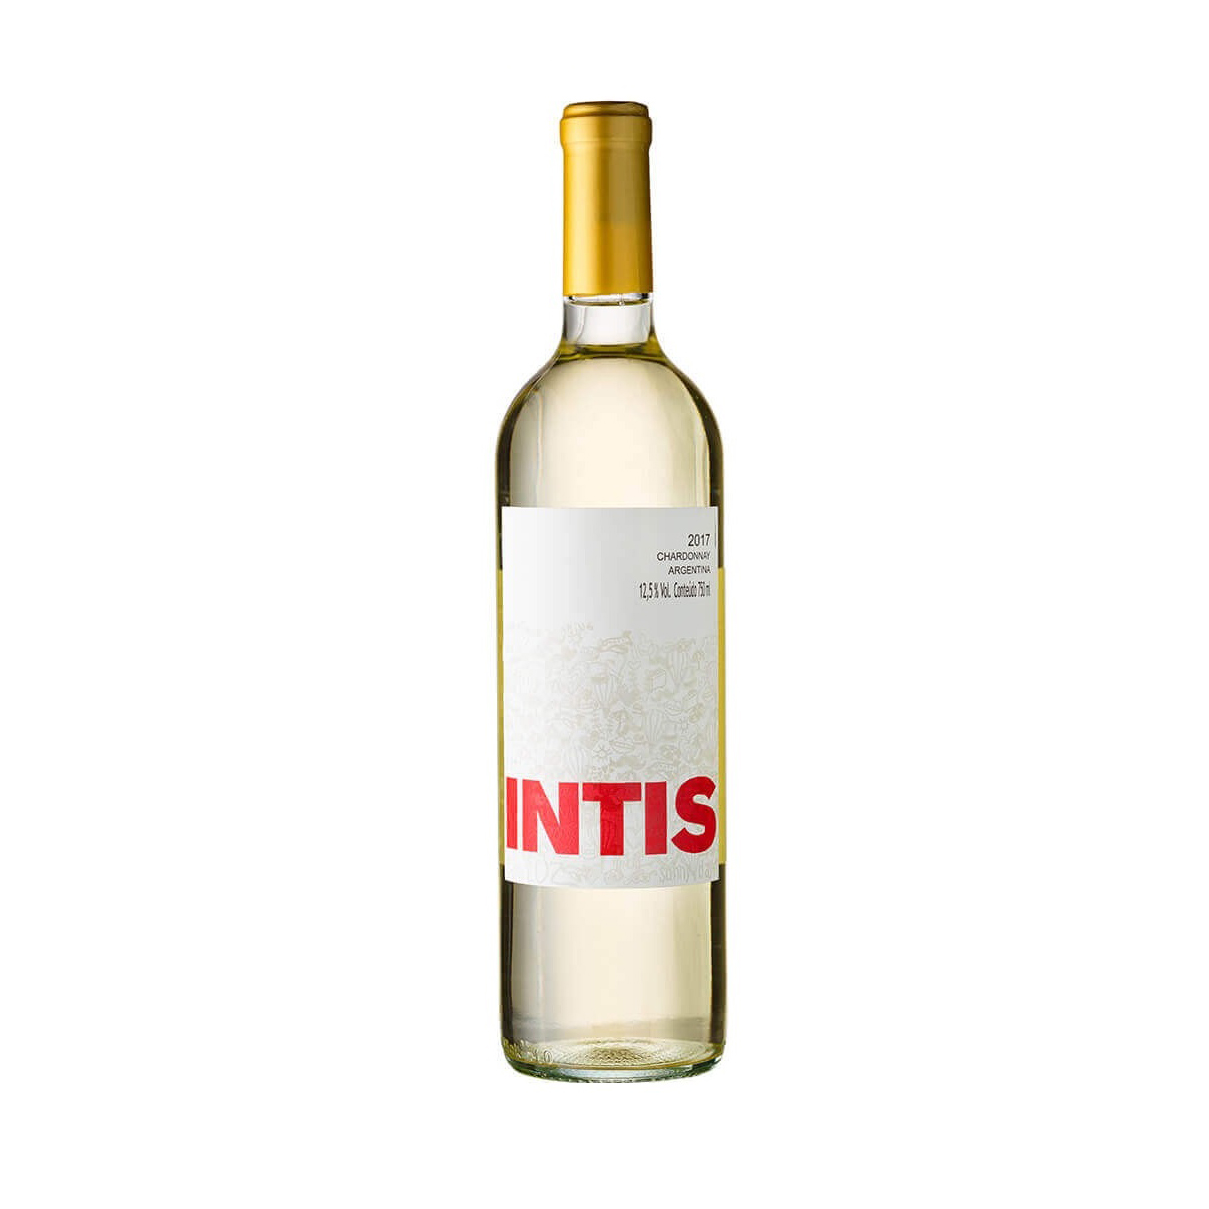 Vang-Intis-Chardonnay-Chenin.jpg (1209×1209)